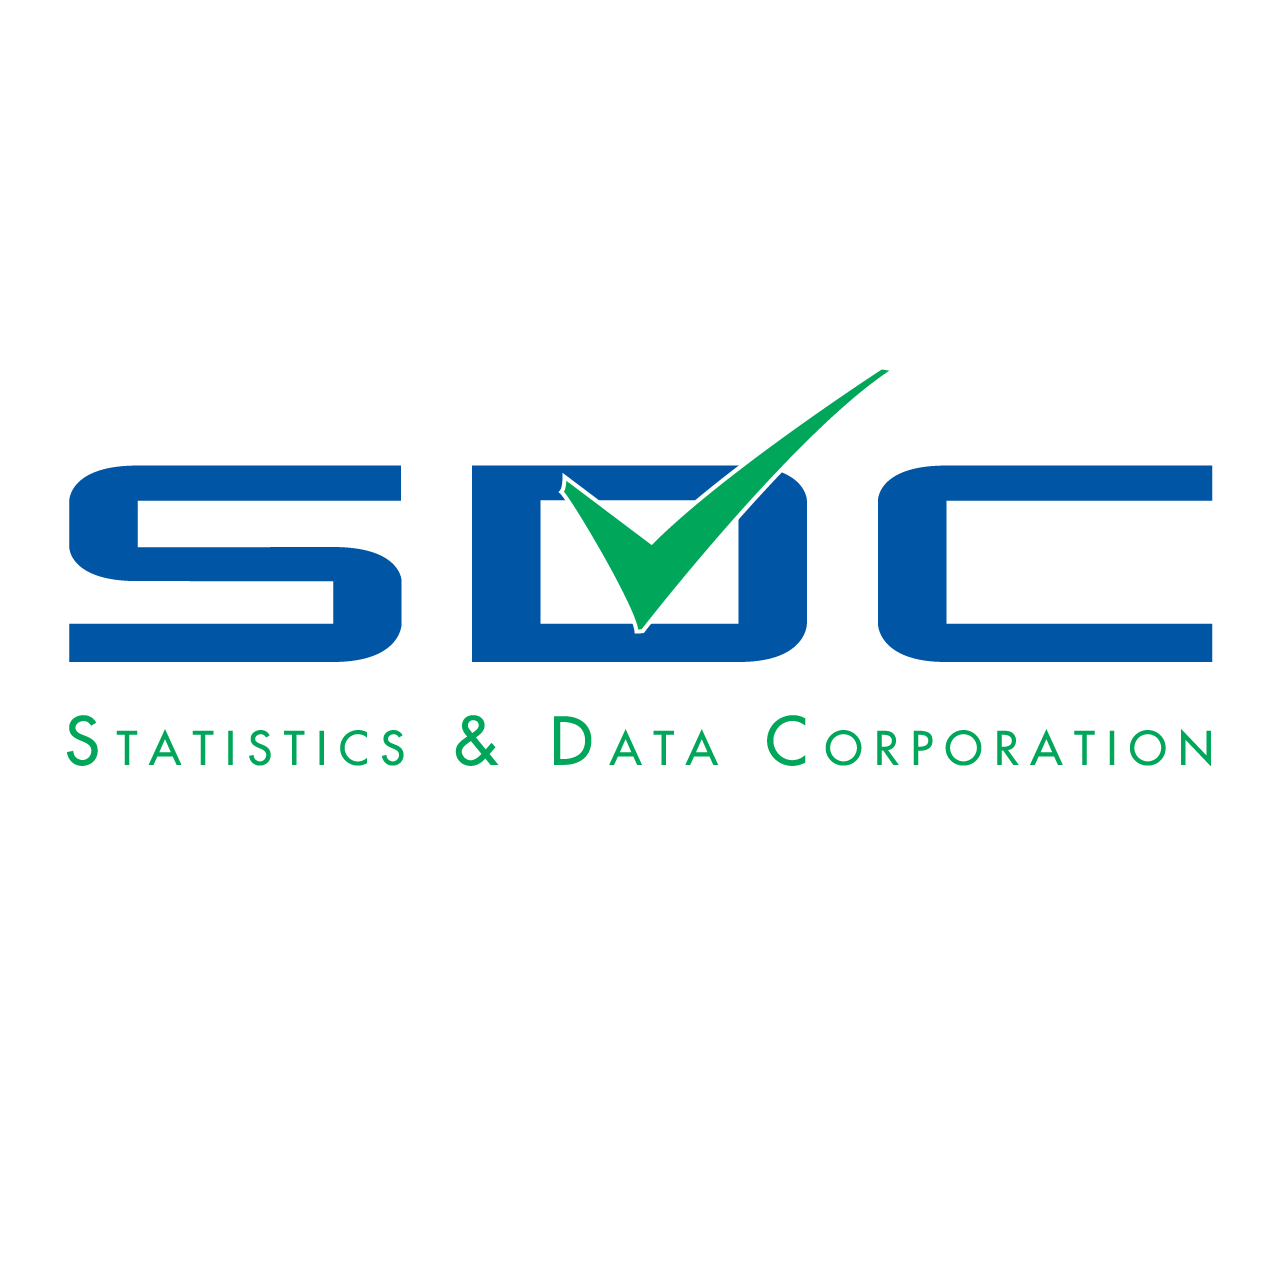   Statistics & Data Corporation